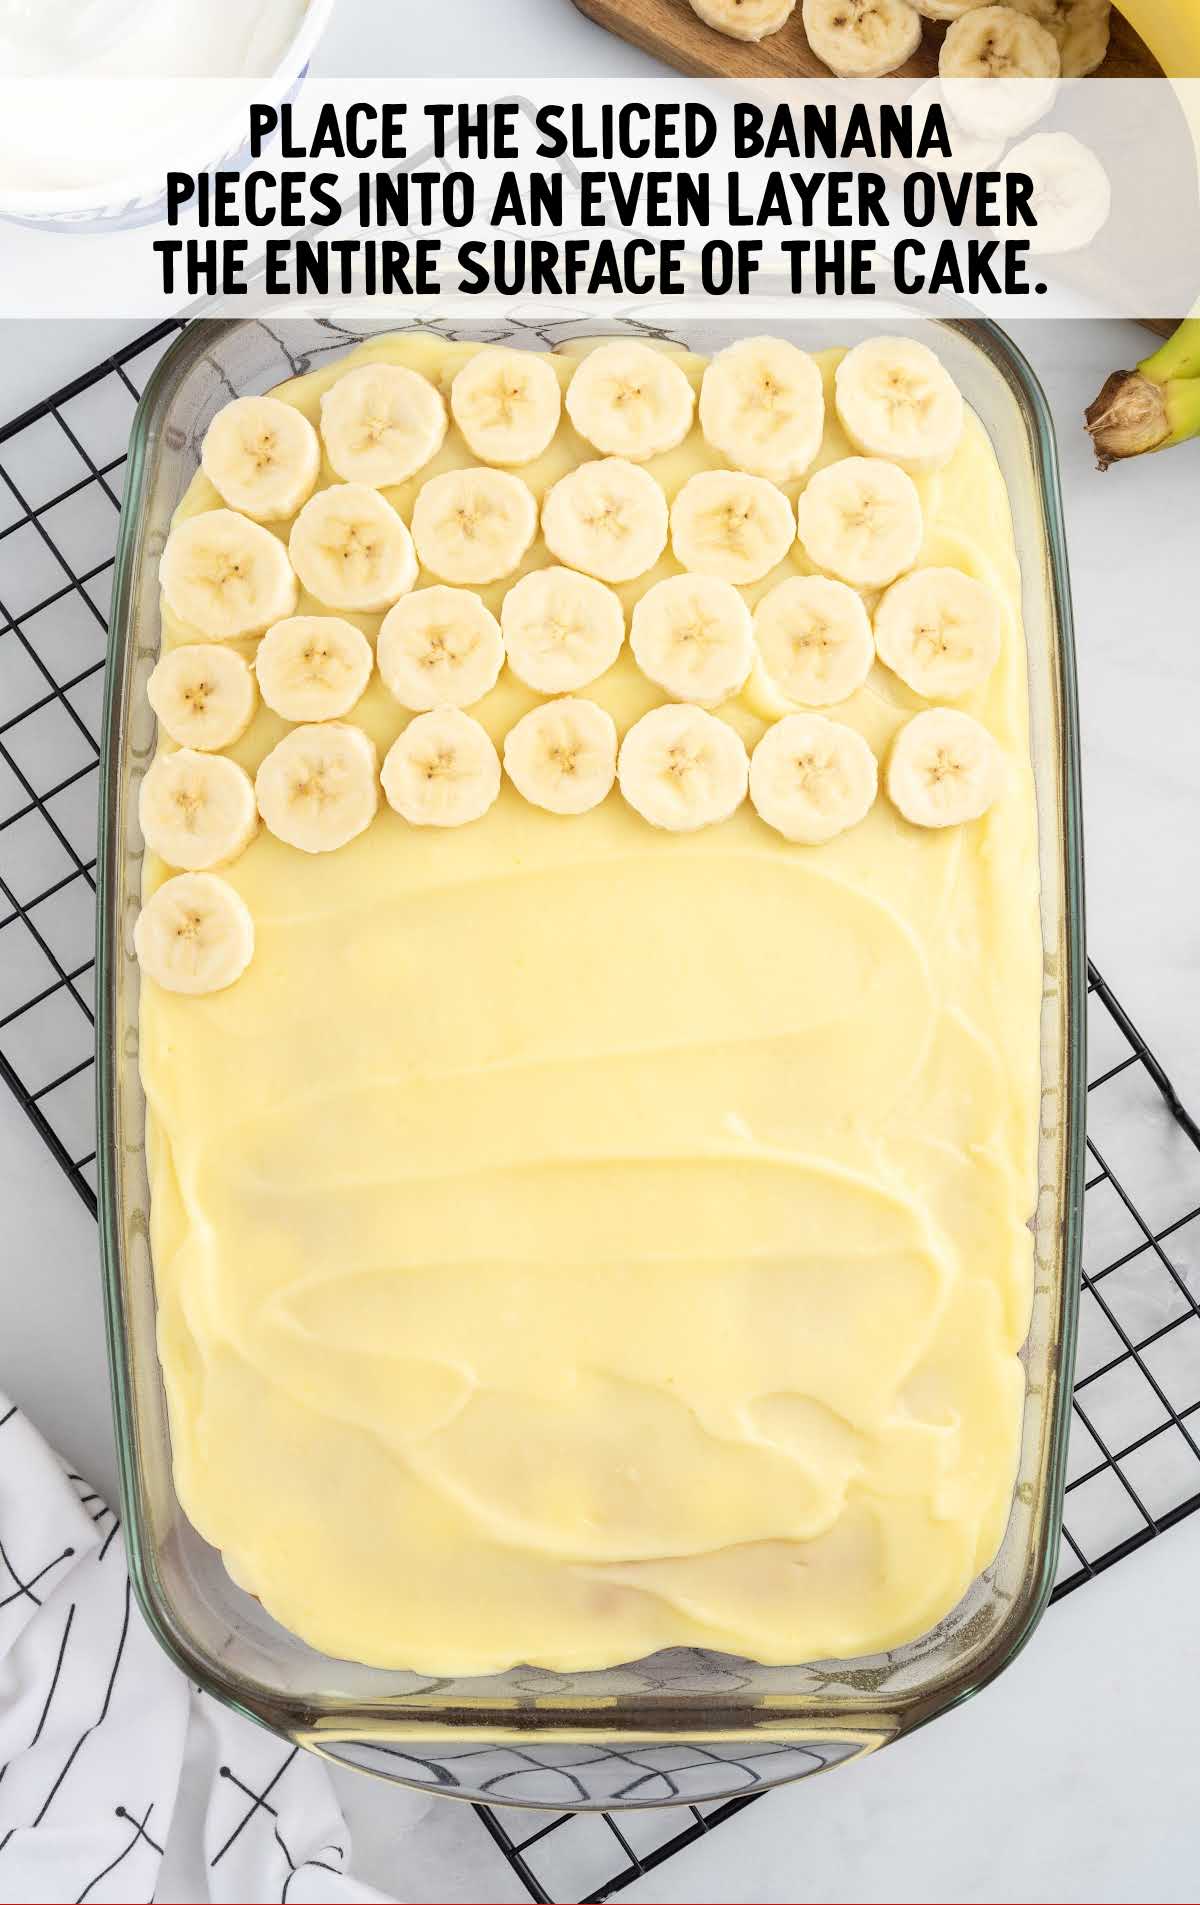 banana slices spread over the cake